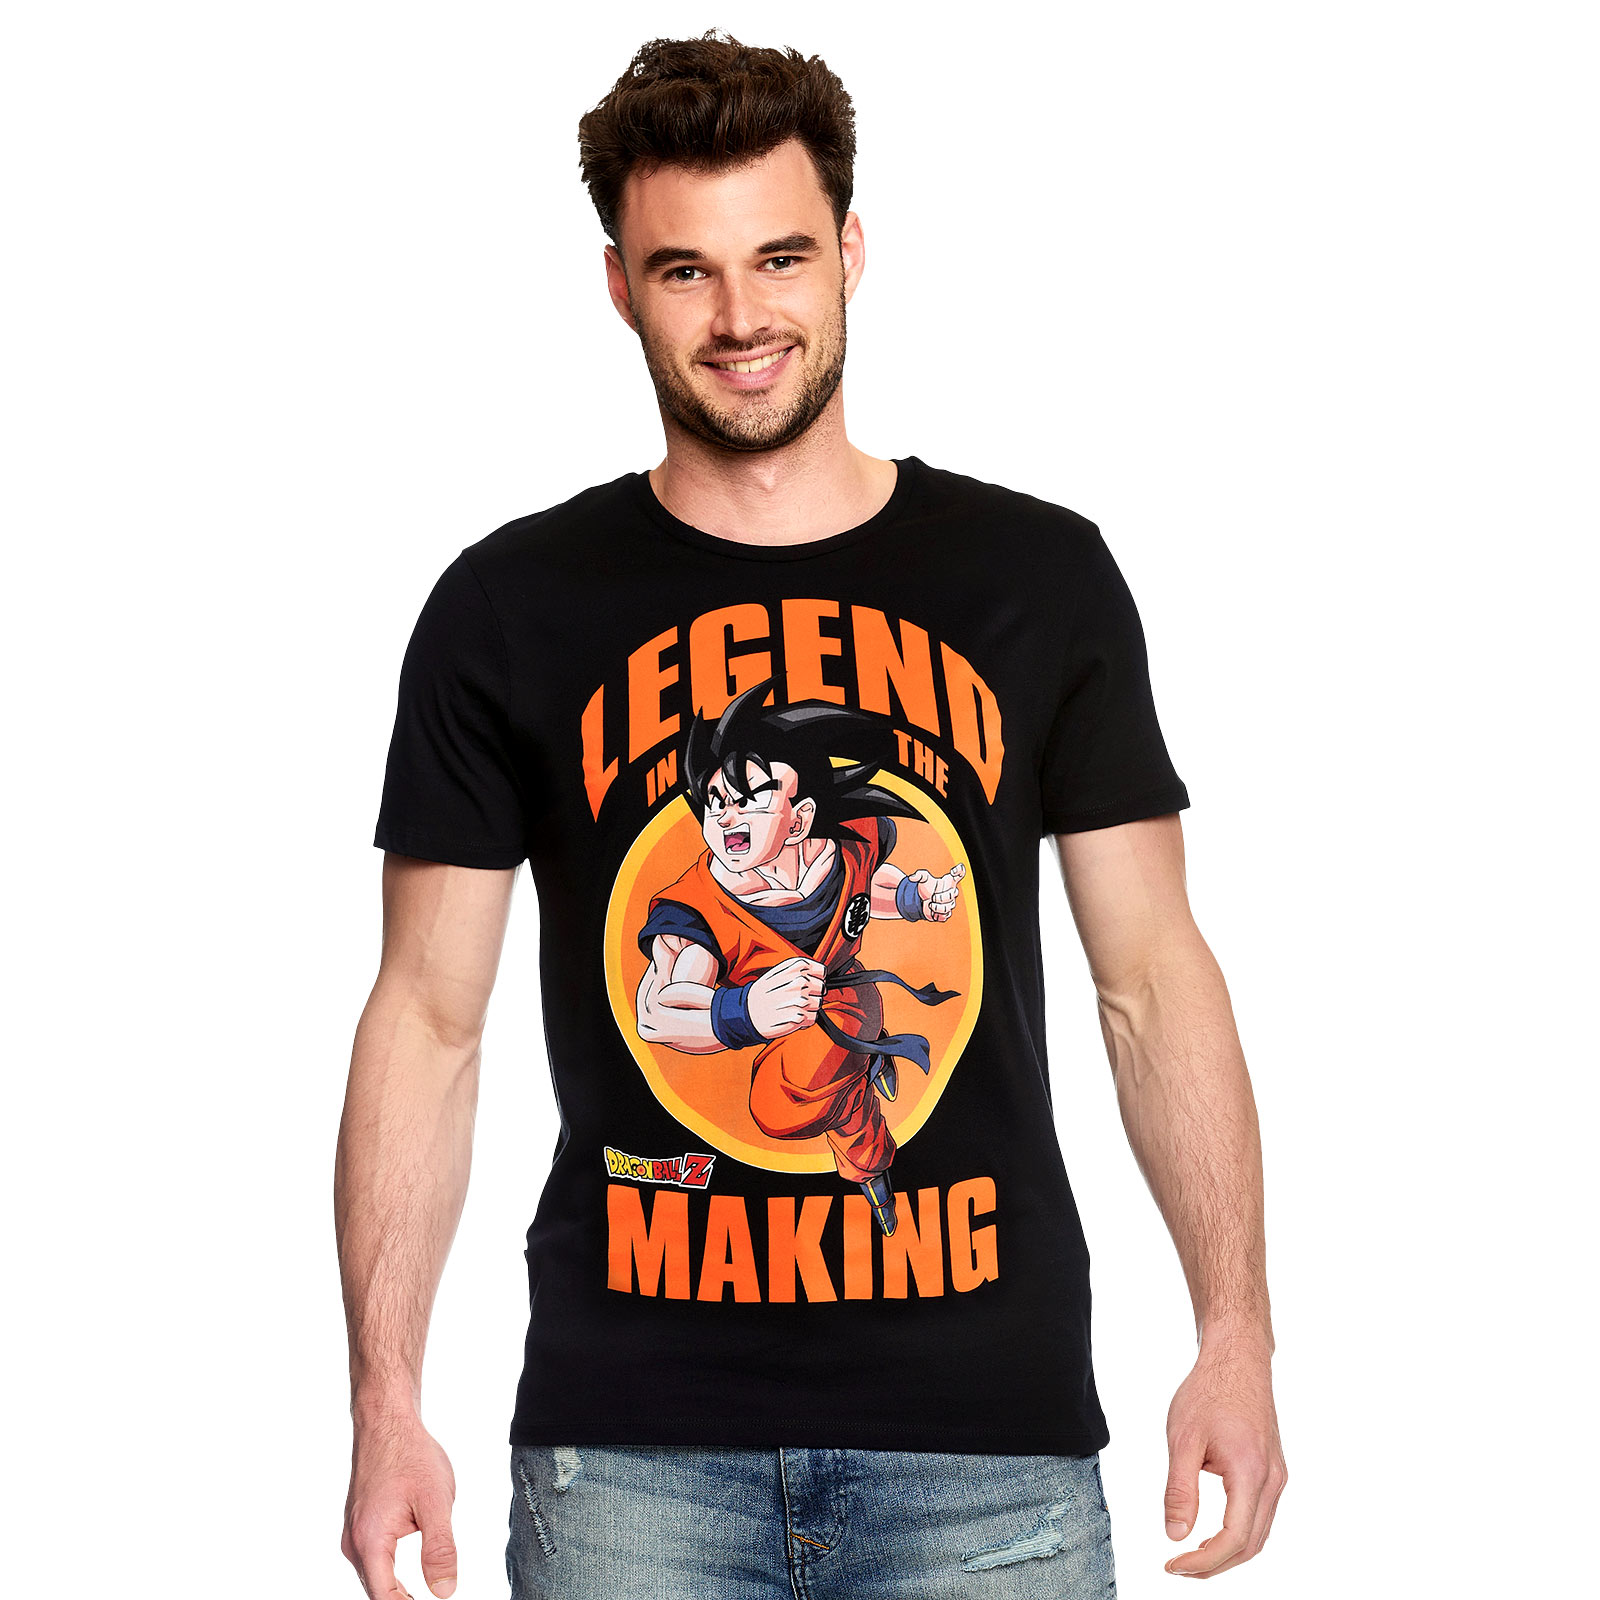 Dragon Ball Z - Legend in the Making T-Shirt schwarz